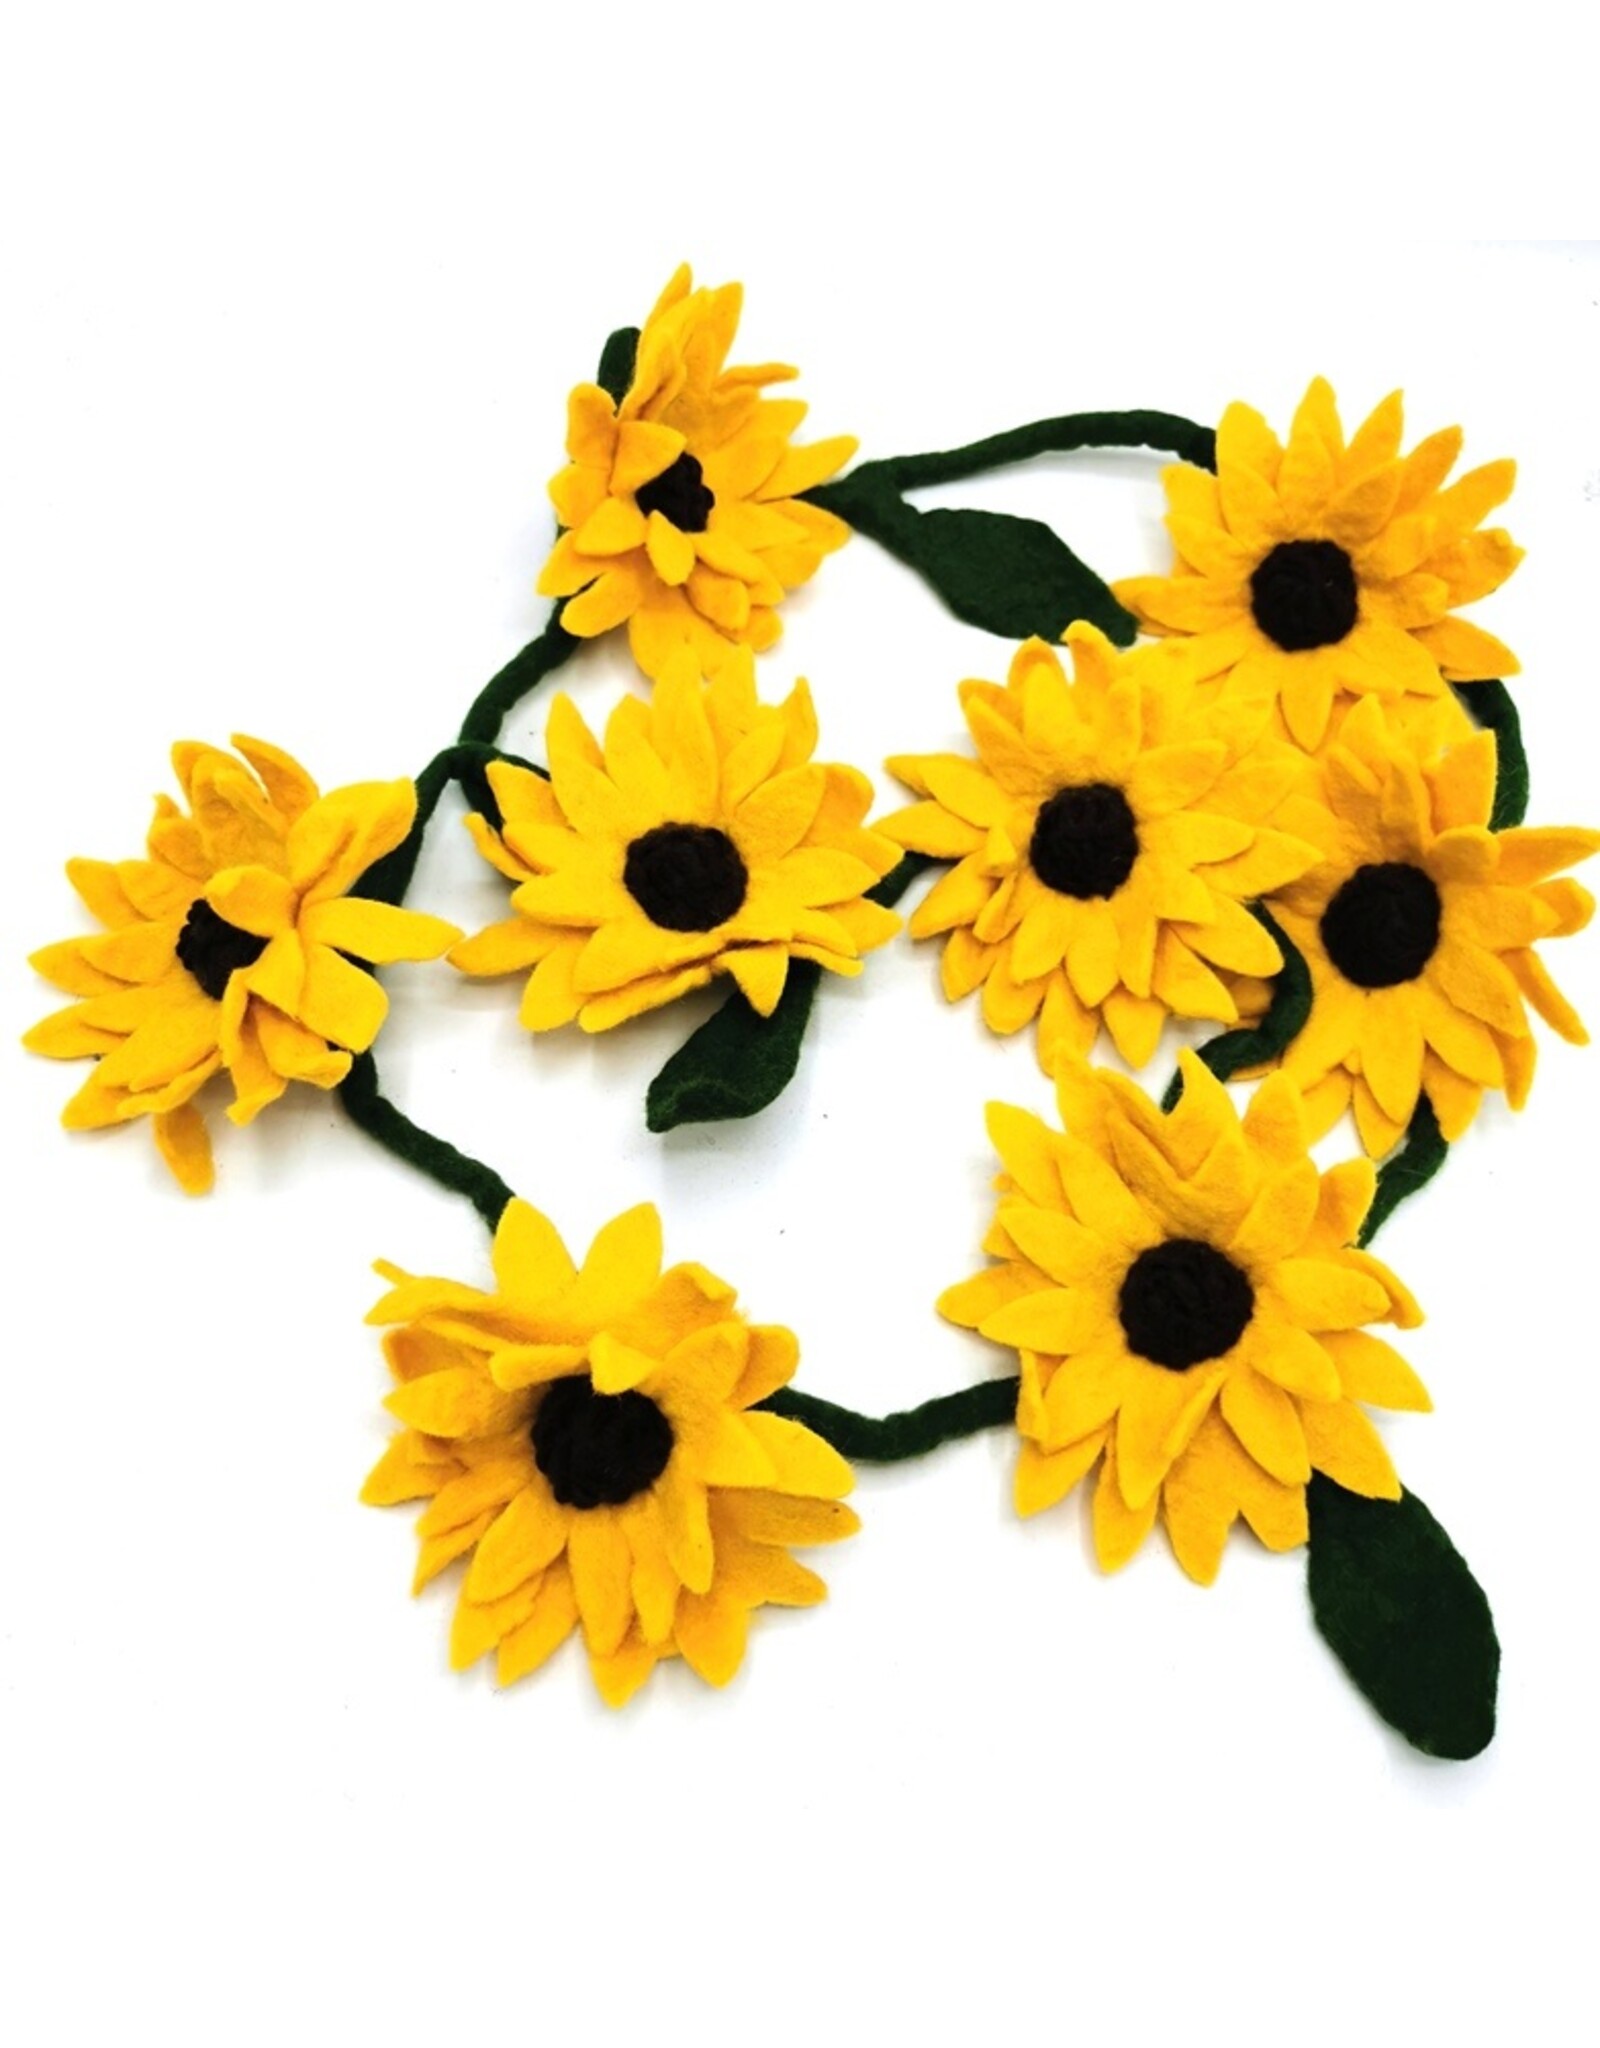 Trukado Miscellaneous - Felt Sunflowers Sling 185cm